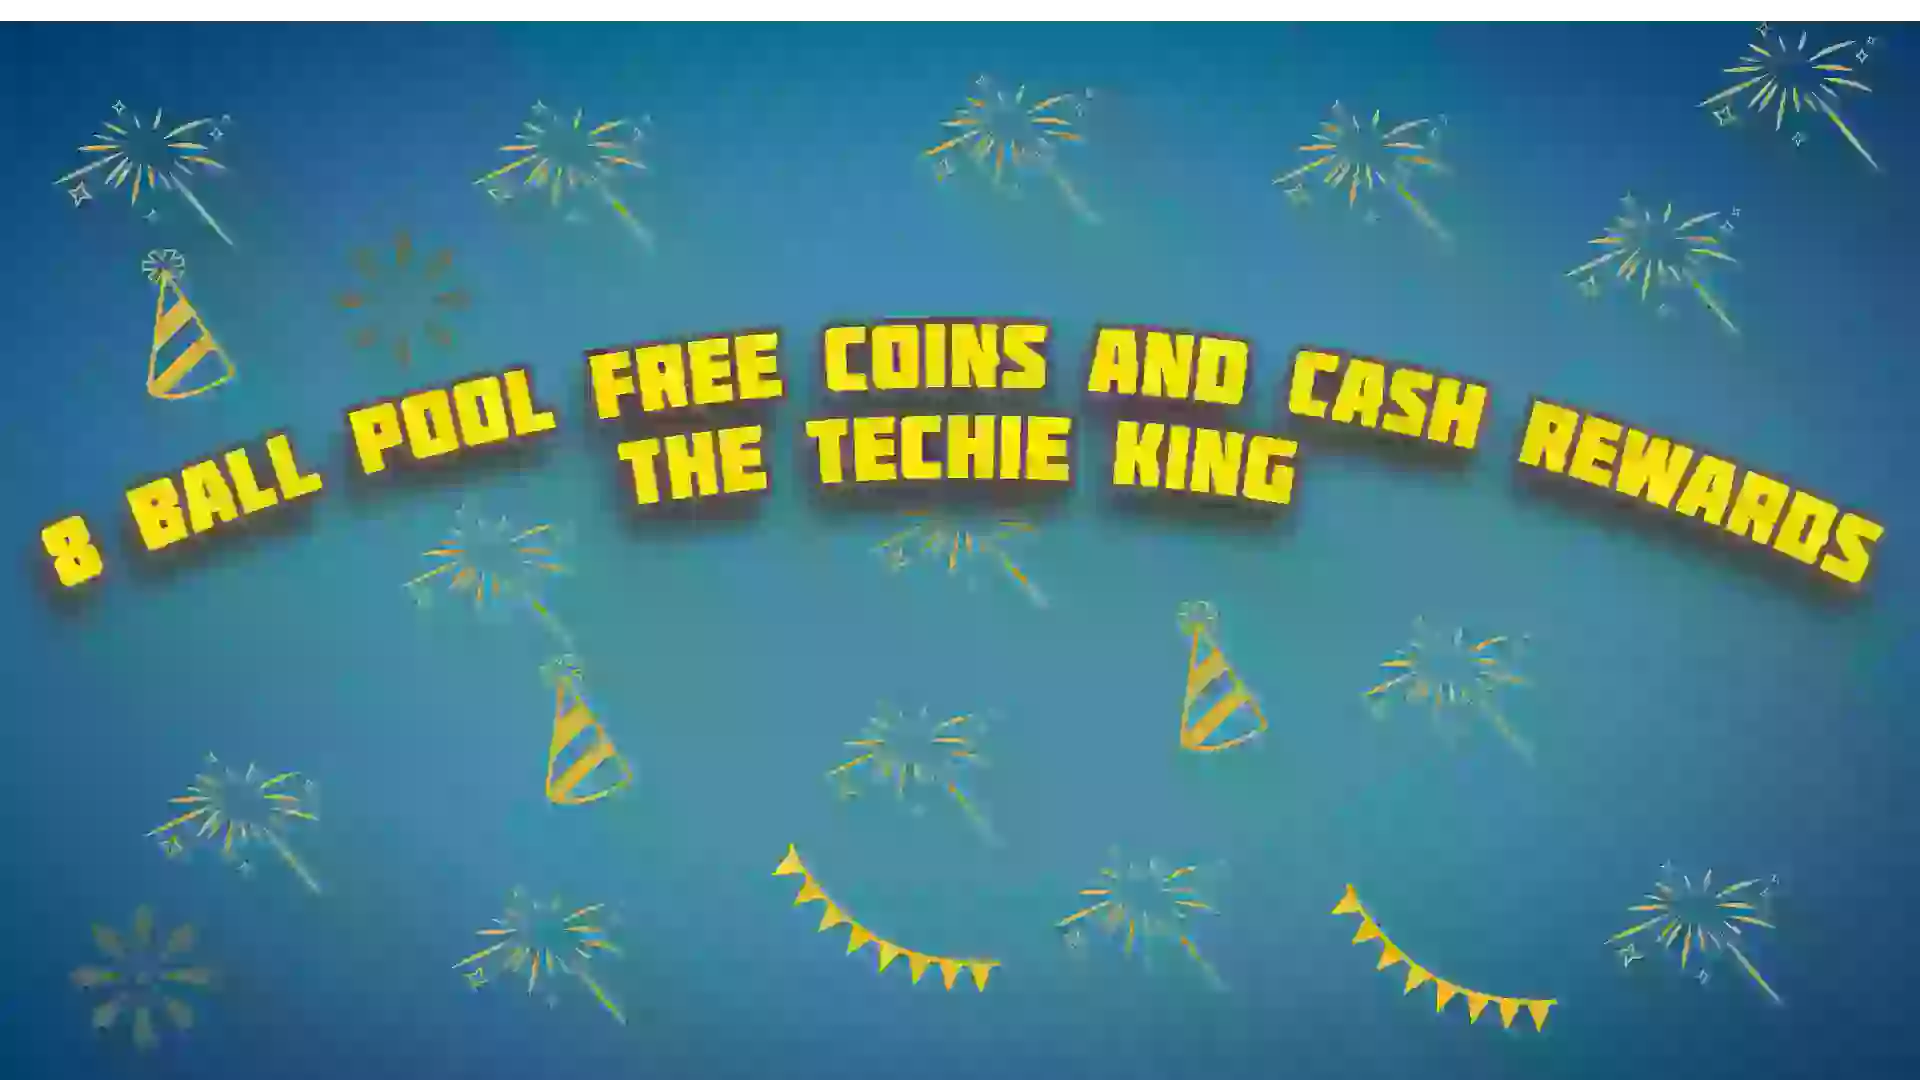 8 Ball Pool Free Coins - Cues Cash Reward Links